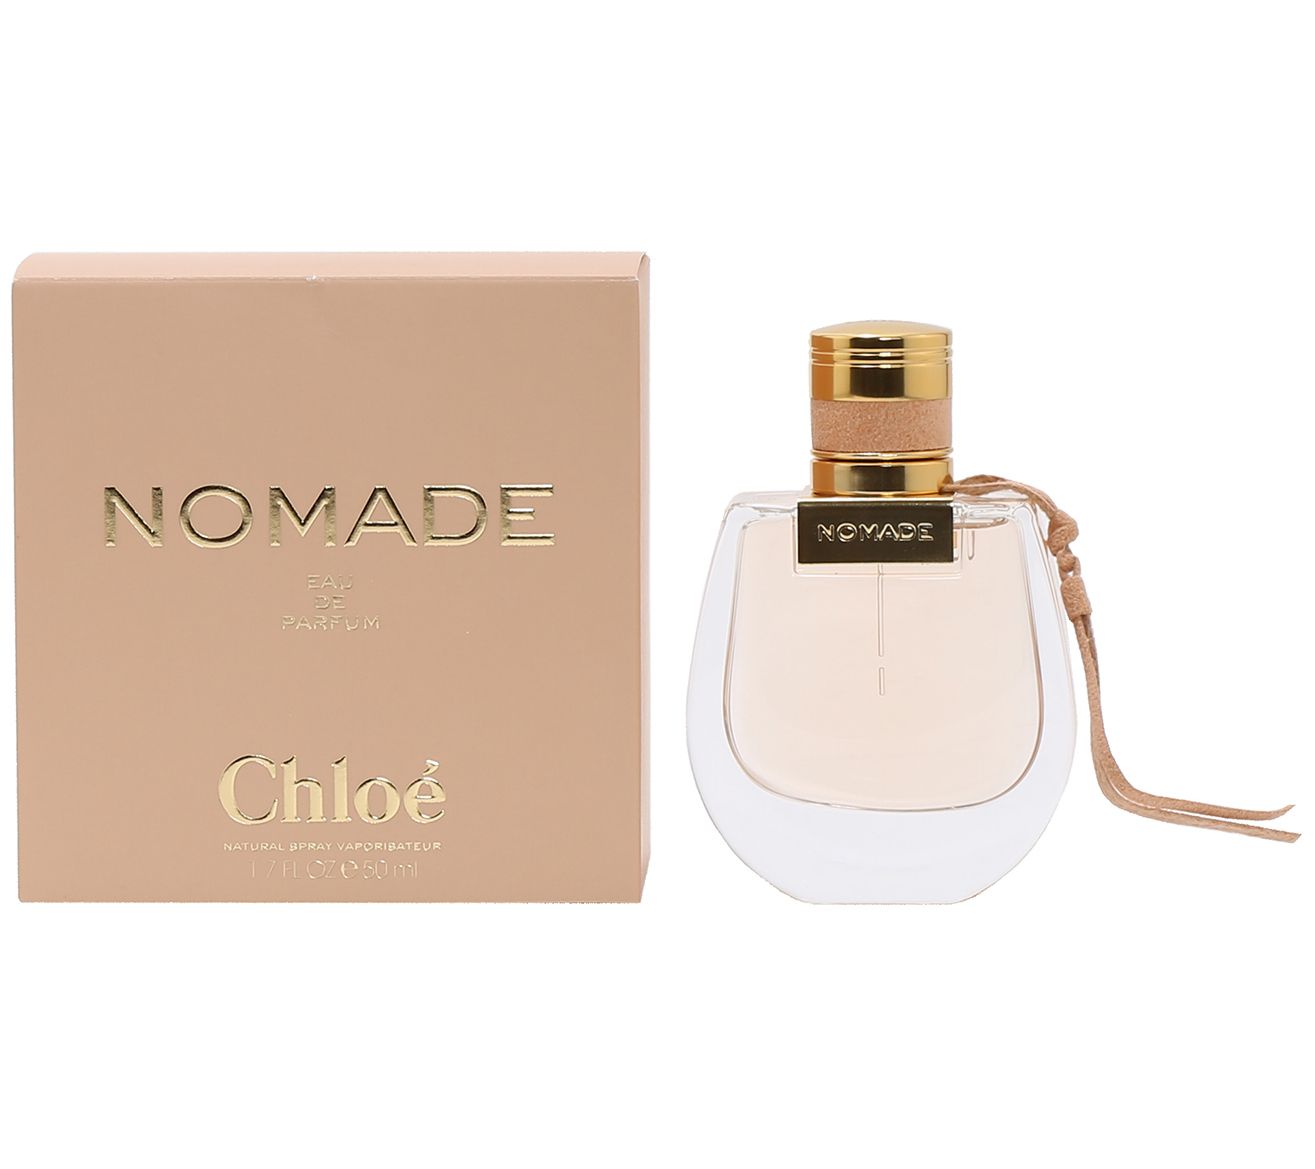 Chloe Nomade 1.7 oz Eau Spray de Ladies Parfum